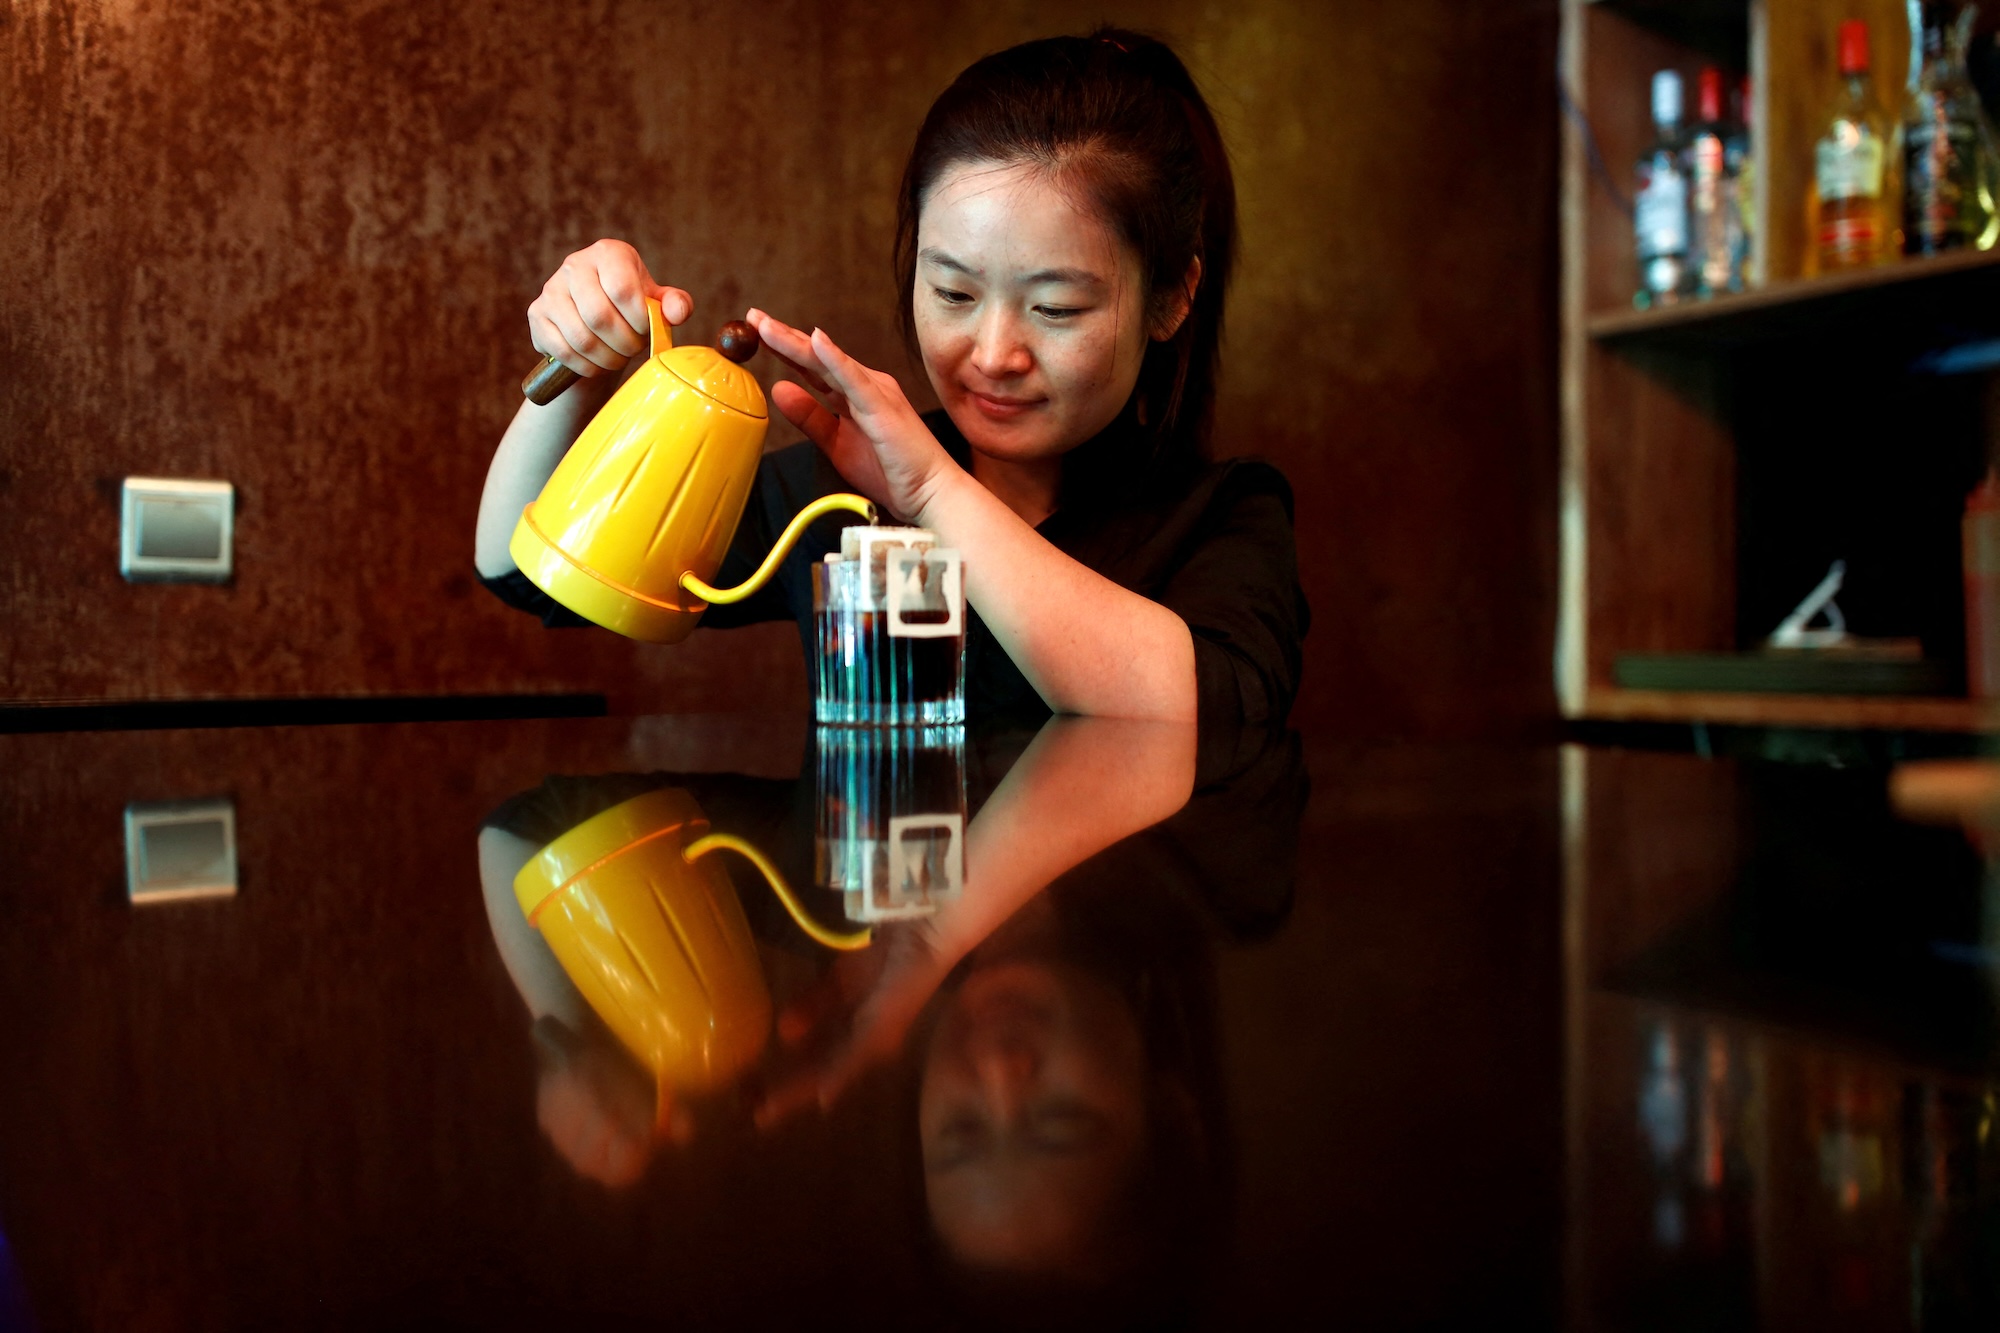 FILE PHOTO: A barista makes drip coffee at the La Tercera cafe in Beijing, China May 6, 2017. REUTERS/Thomas Peter/File Photo